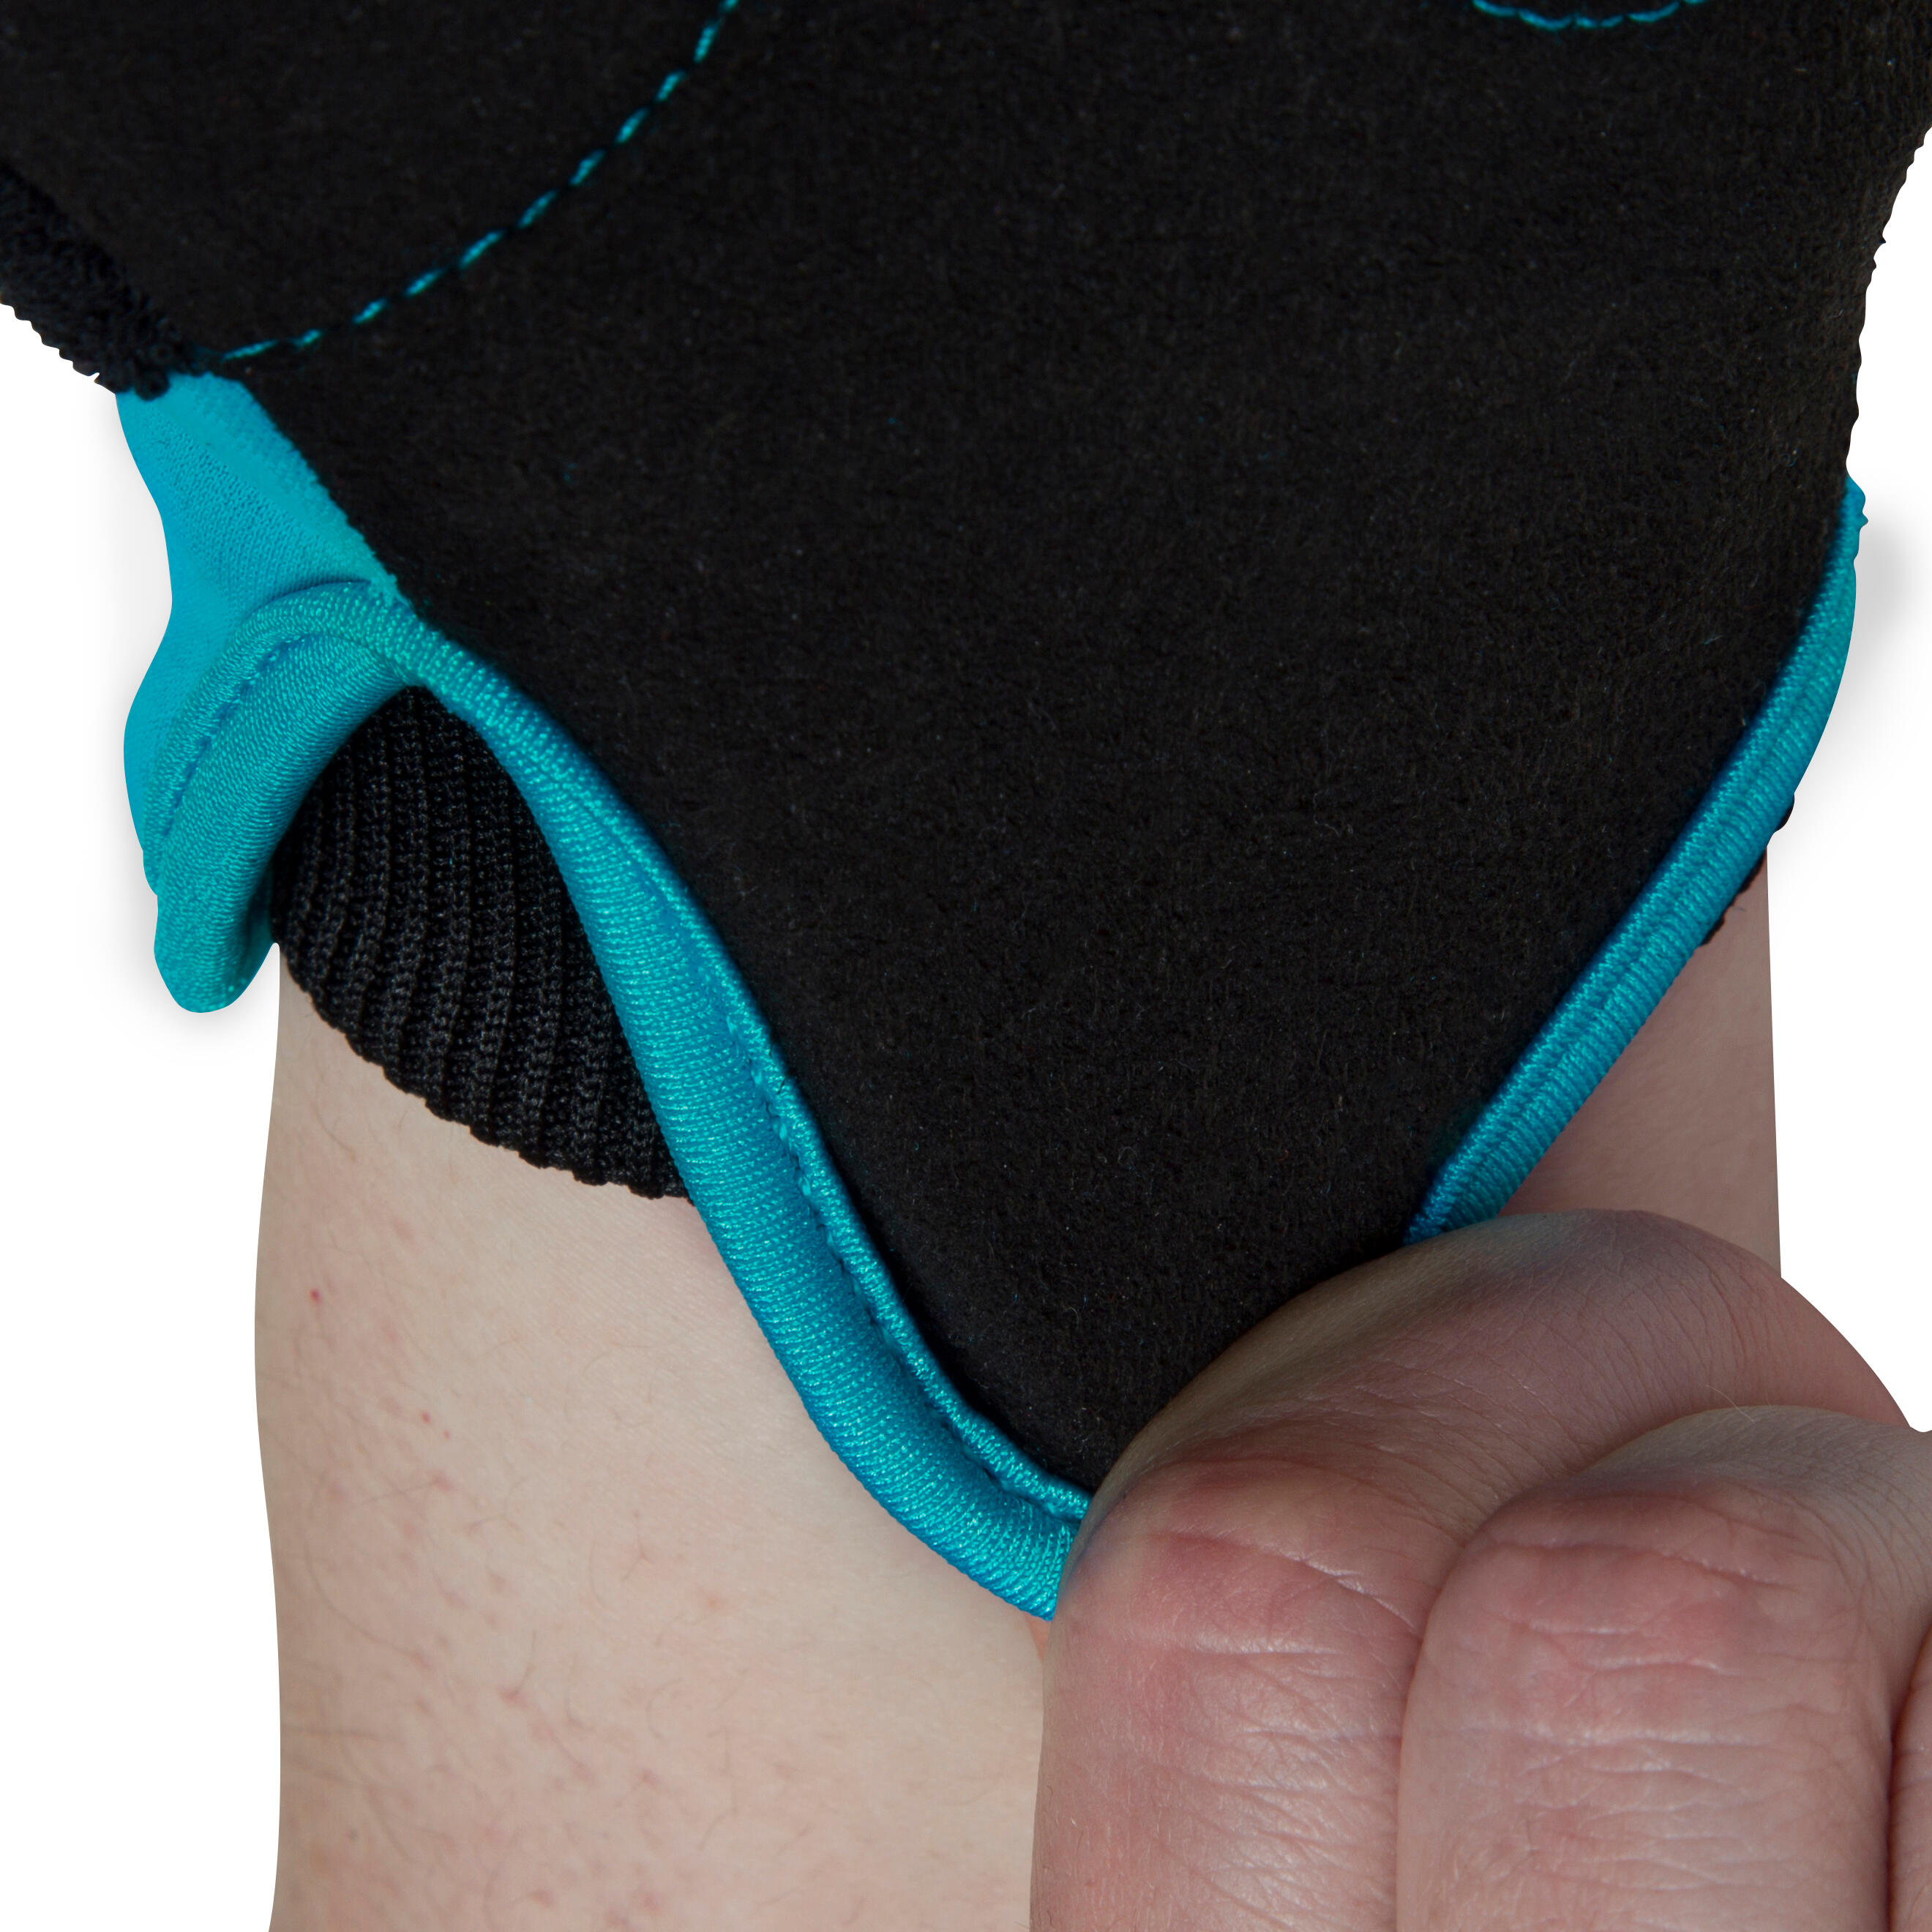 500 Women's Cycling Winter Gloves - Blue 7/11